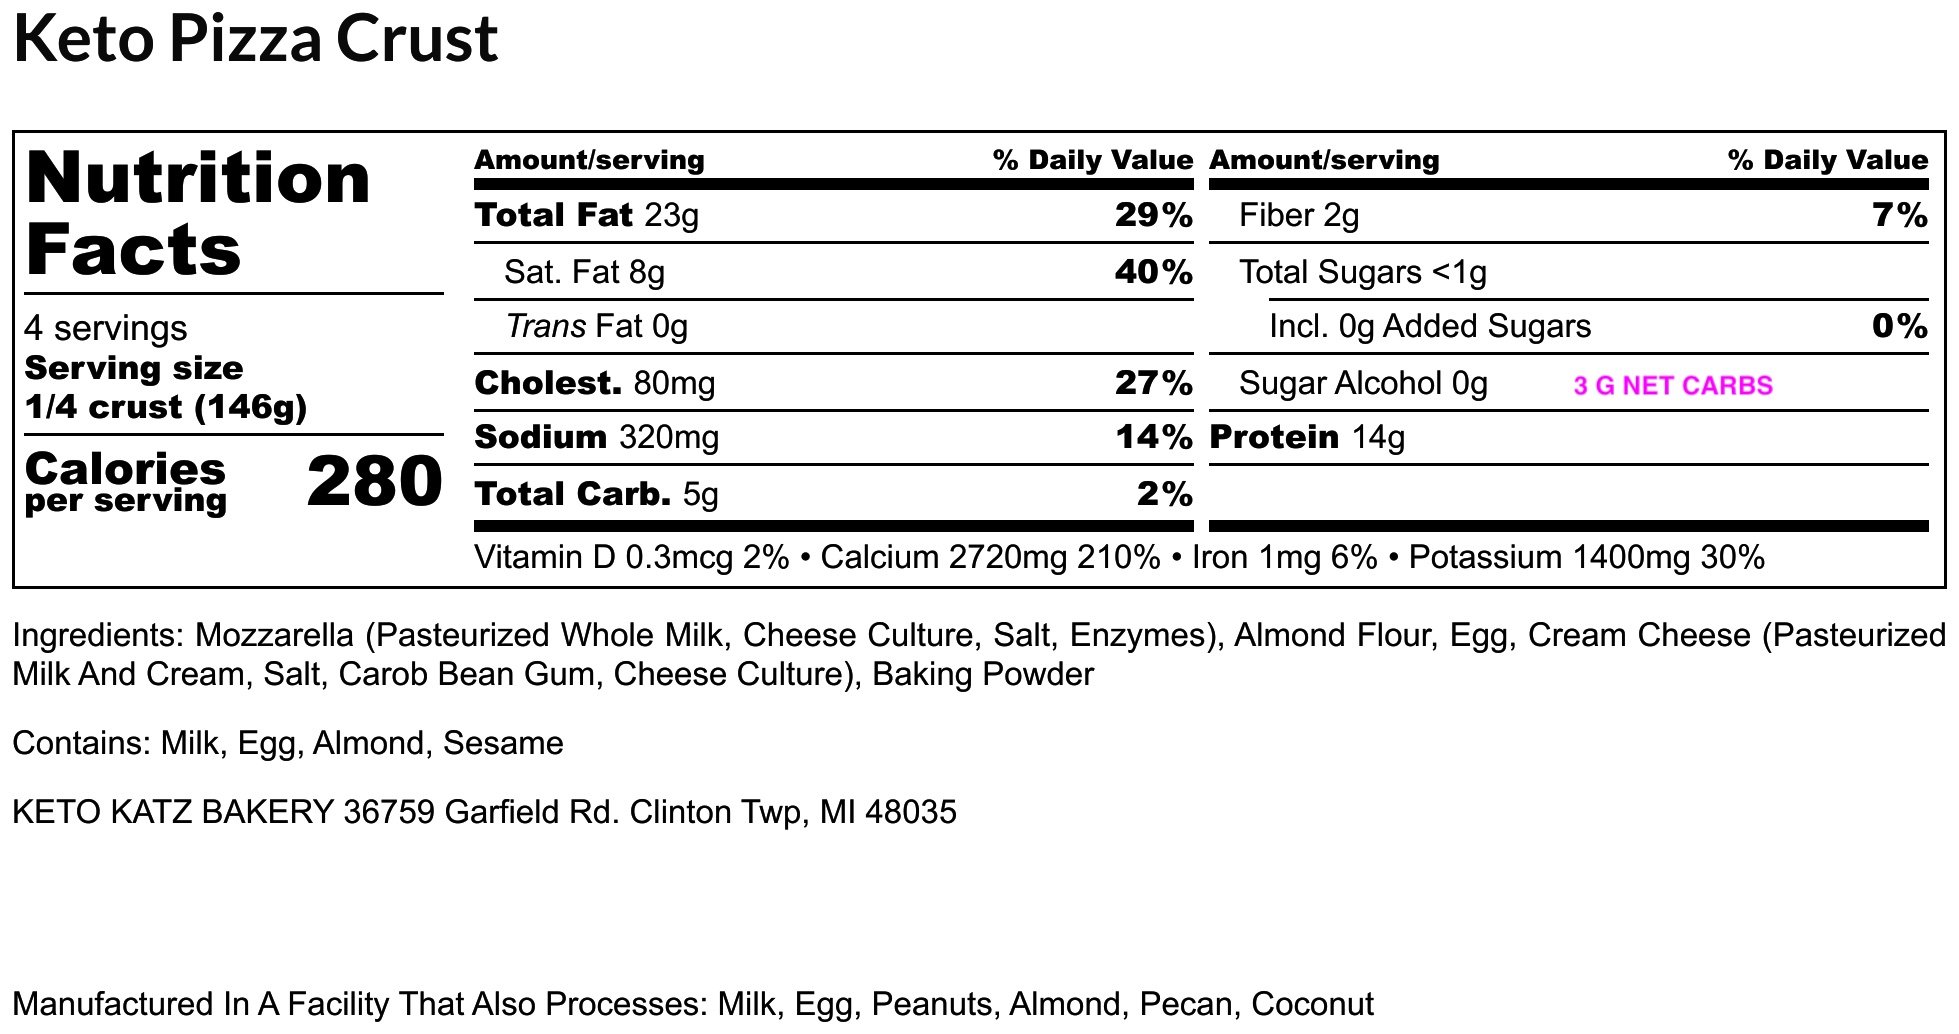 Keto Pizza Crust - Nutrition Label copy 2.jpg